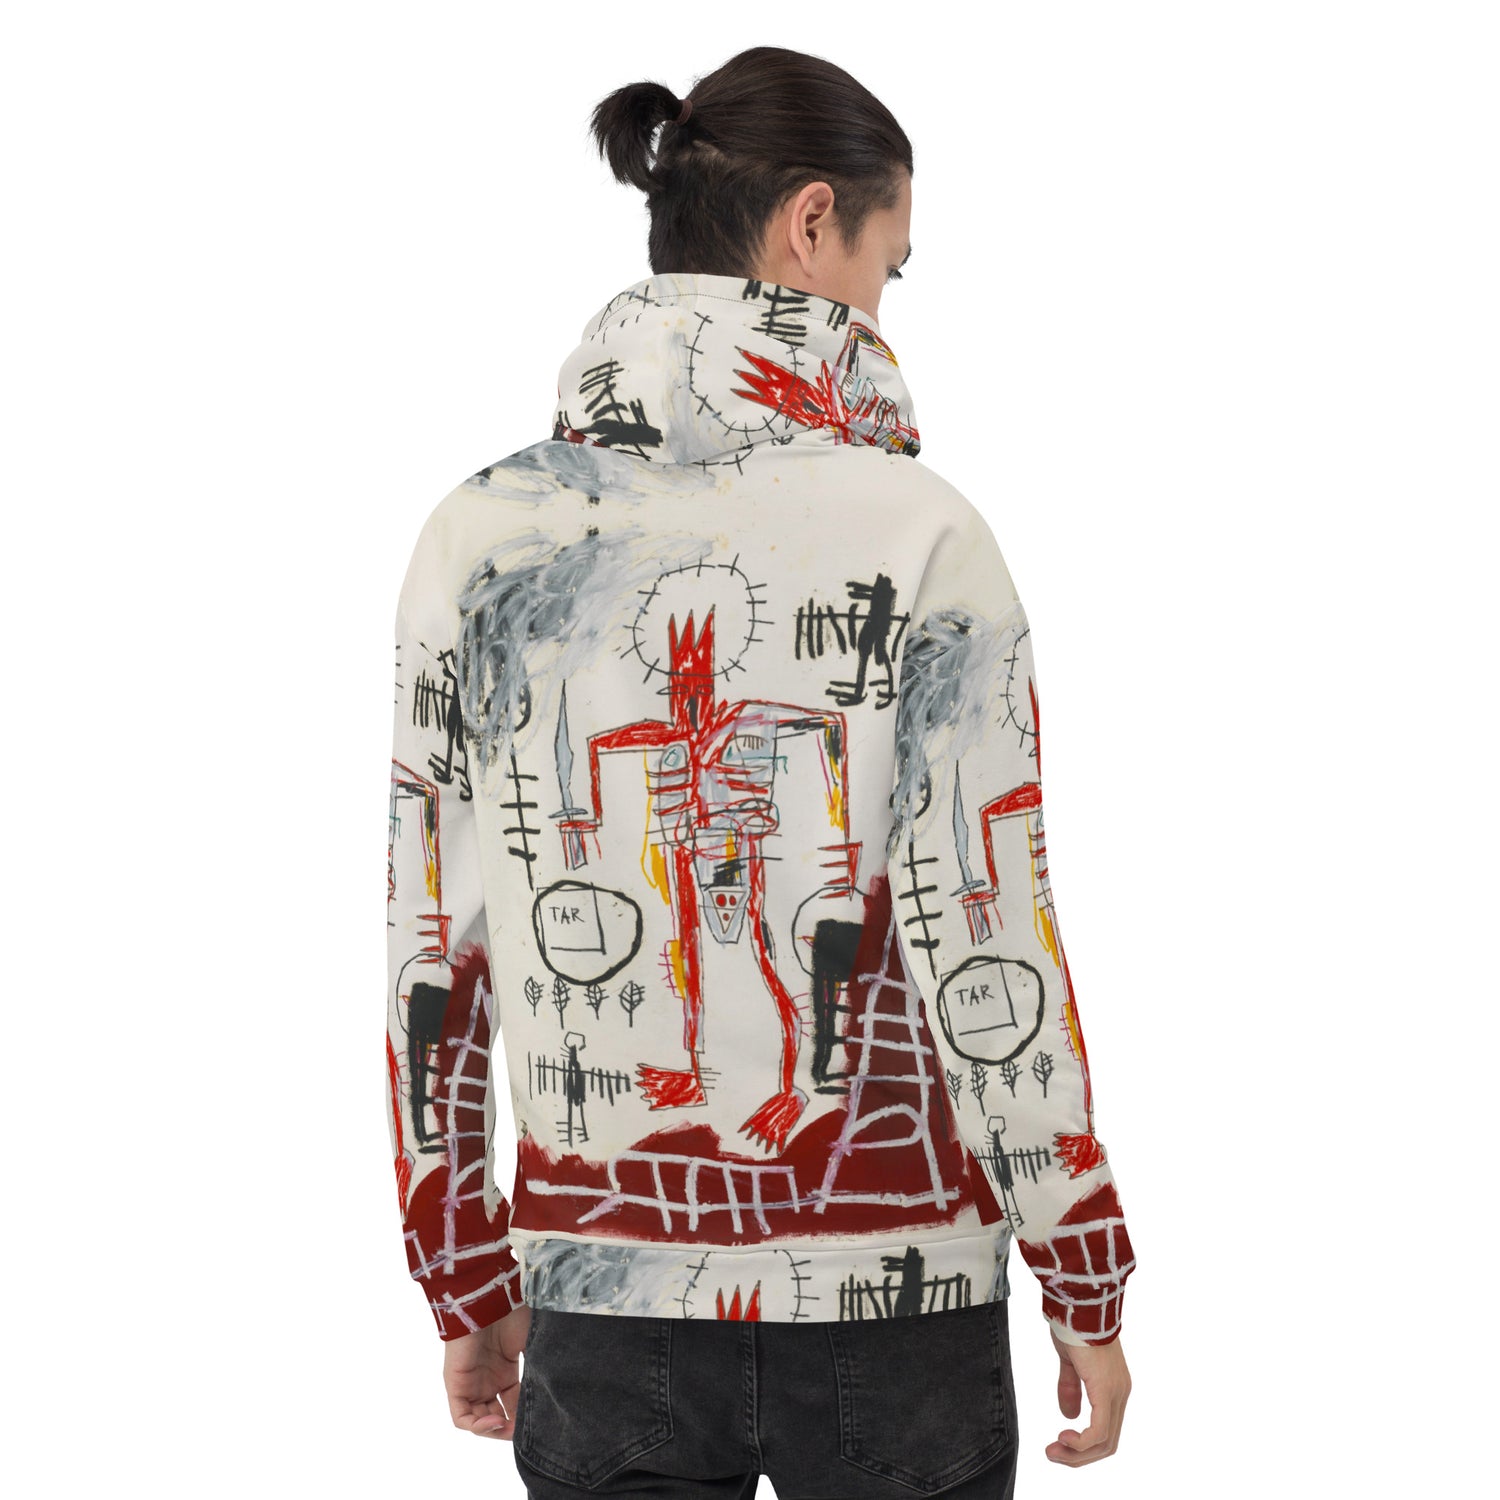 Jean-Michel Basquiat "Untitled" Artwork Printed Premium Streetwear Sweatshirt Hoodie Harajuku Graffiti 